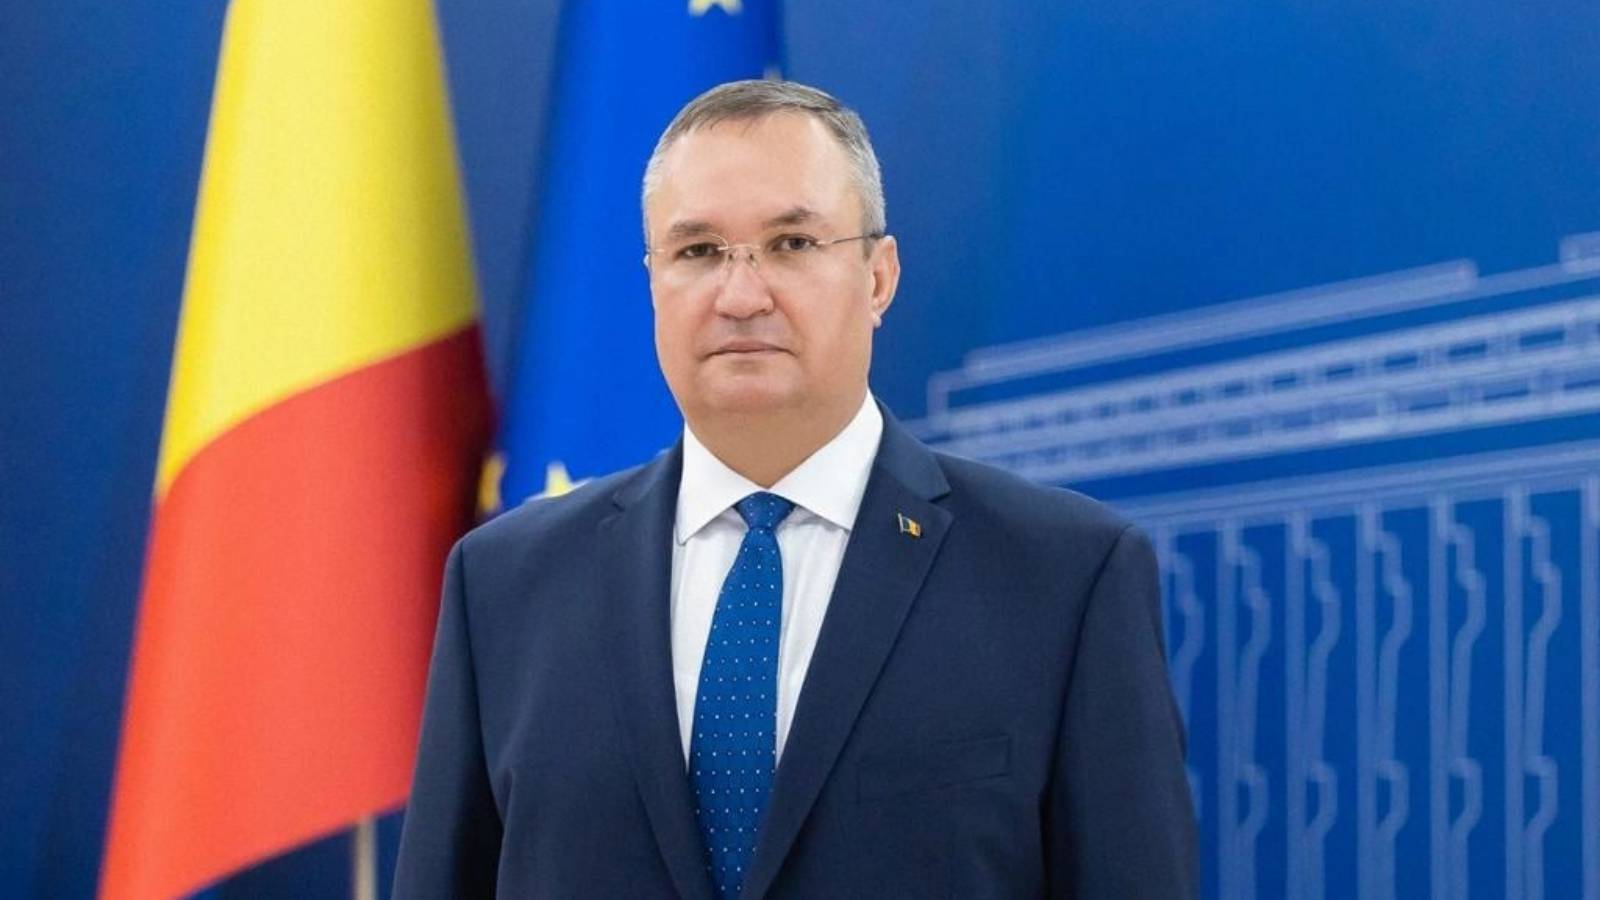 Romania has the highest economic growth in the EU, according to Prime Minister Nicolae Ciuca